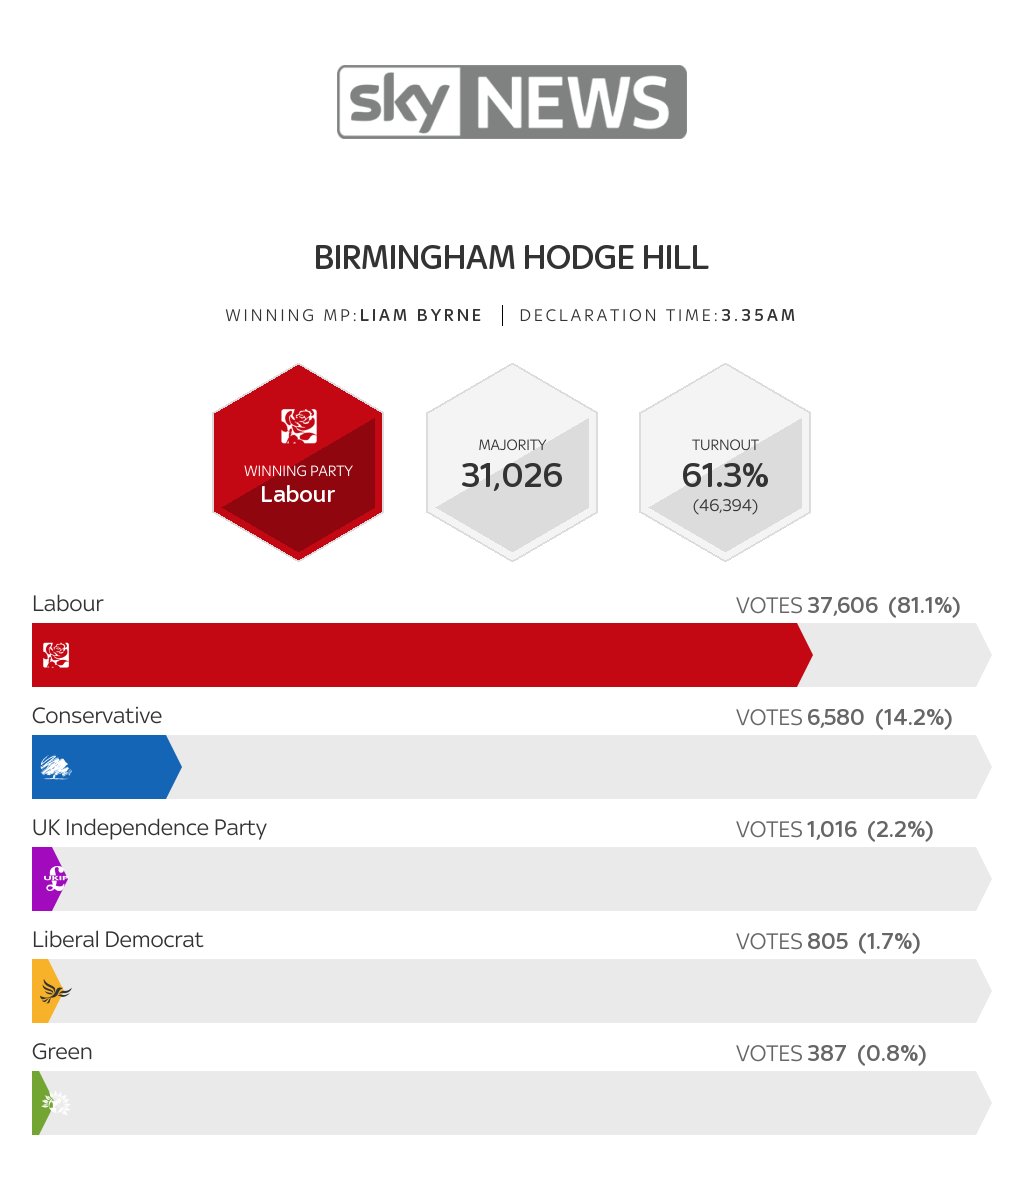 Full election result for #BirminghamHodgeHill election.news.sky.com/snap-general-e… #GE2017